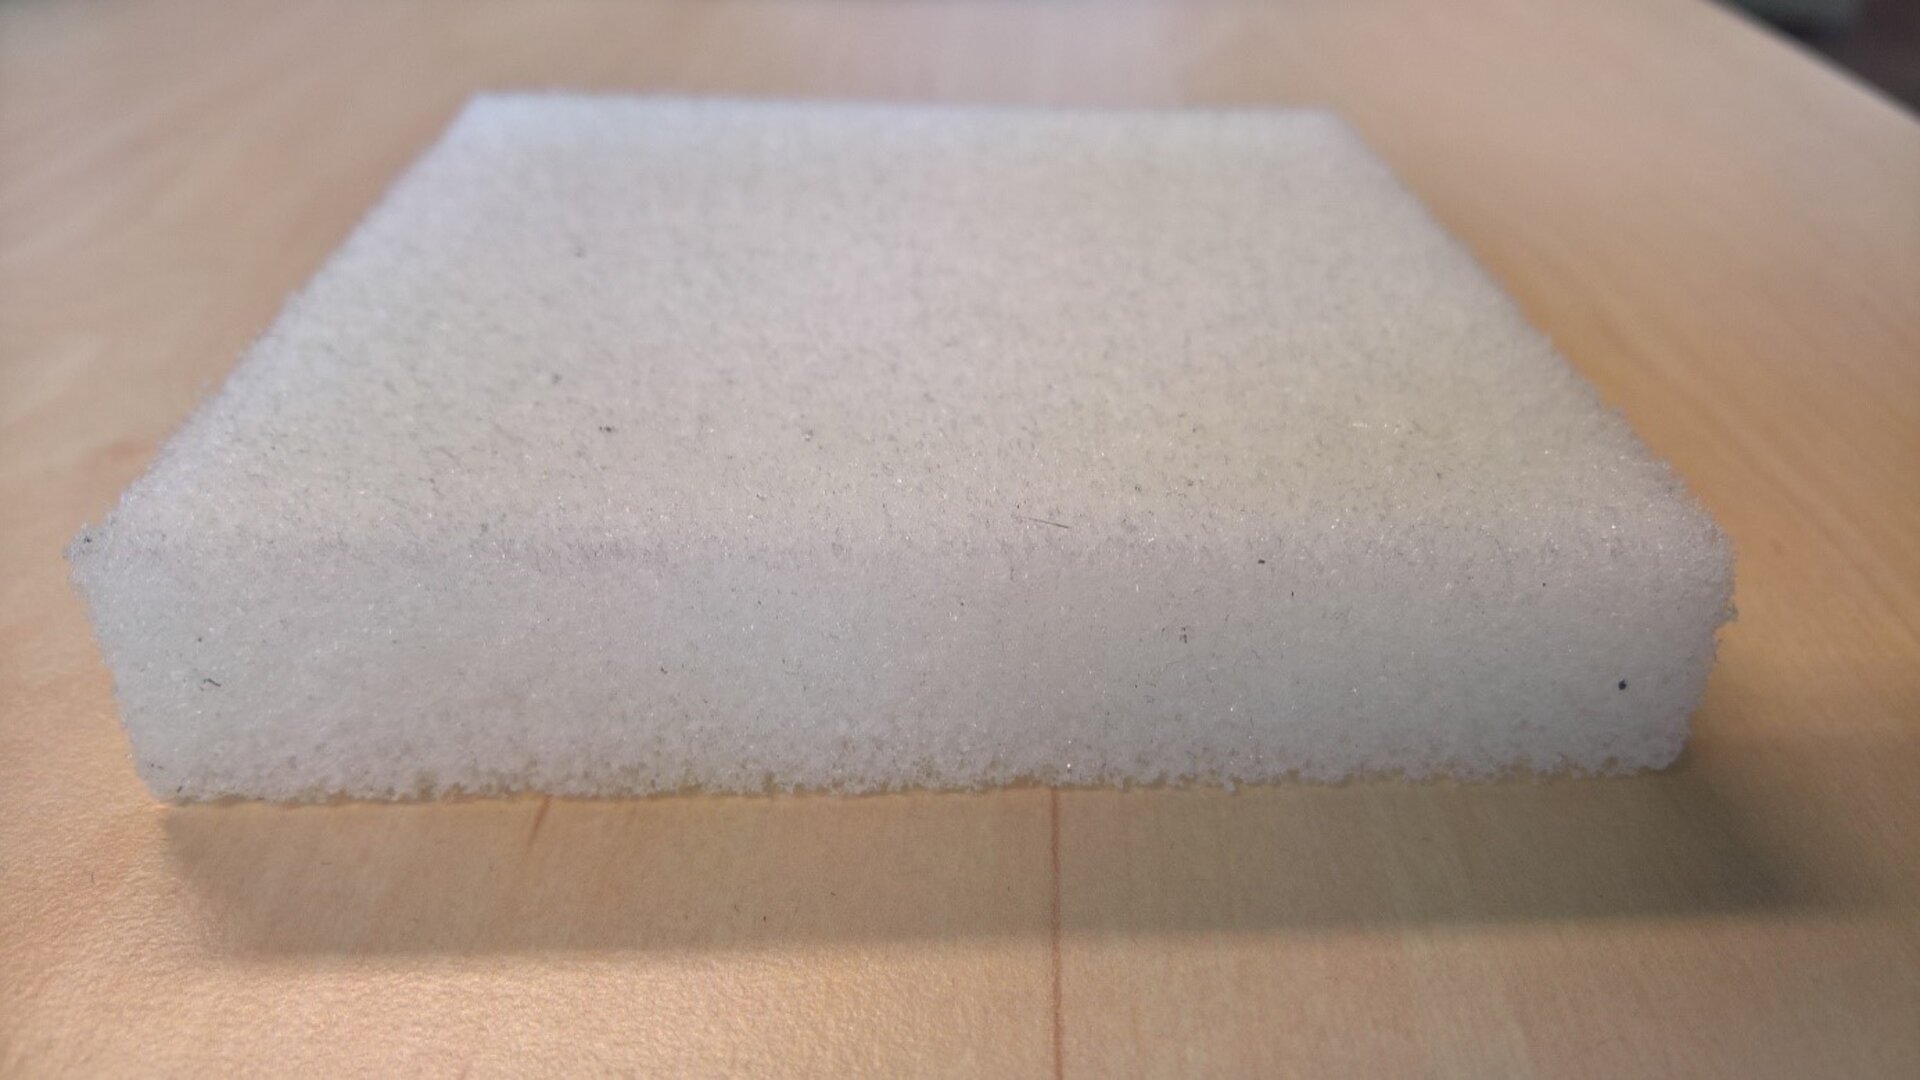 polyurethane foam mattress health issues